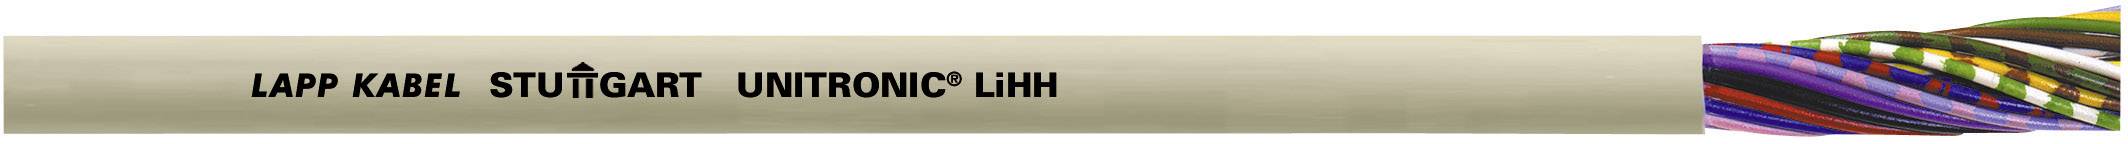 LAPP 37143-100 Datenleitung UNITRONIC LiHH 5 x 0.34 mm² Kieselgrau (RAL 7032) 100 m